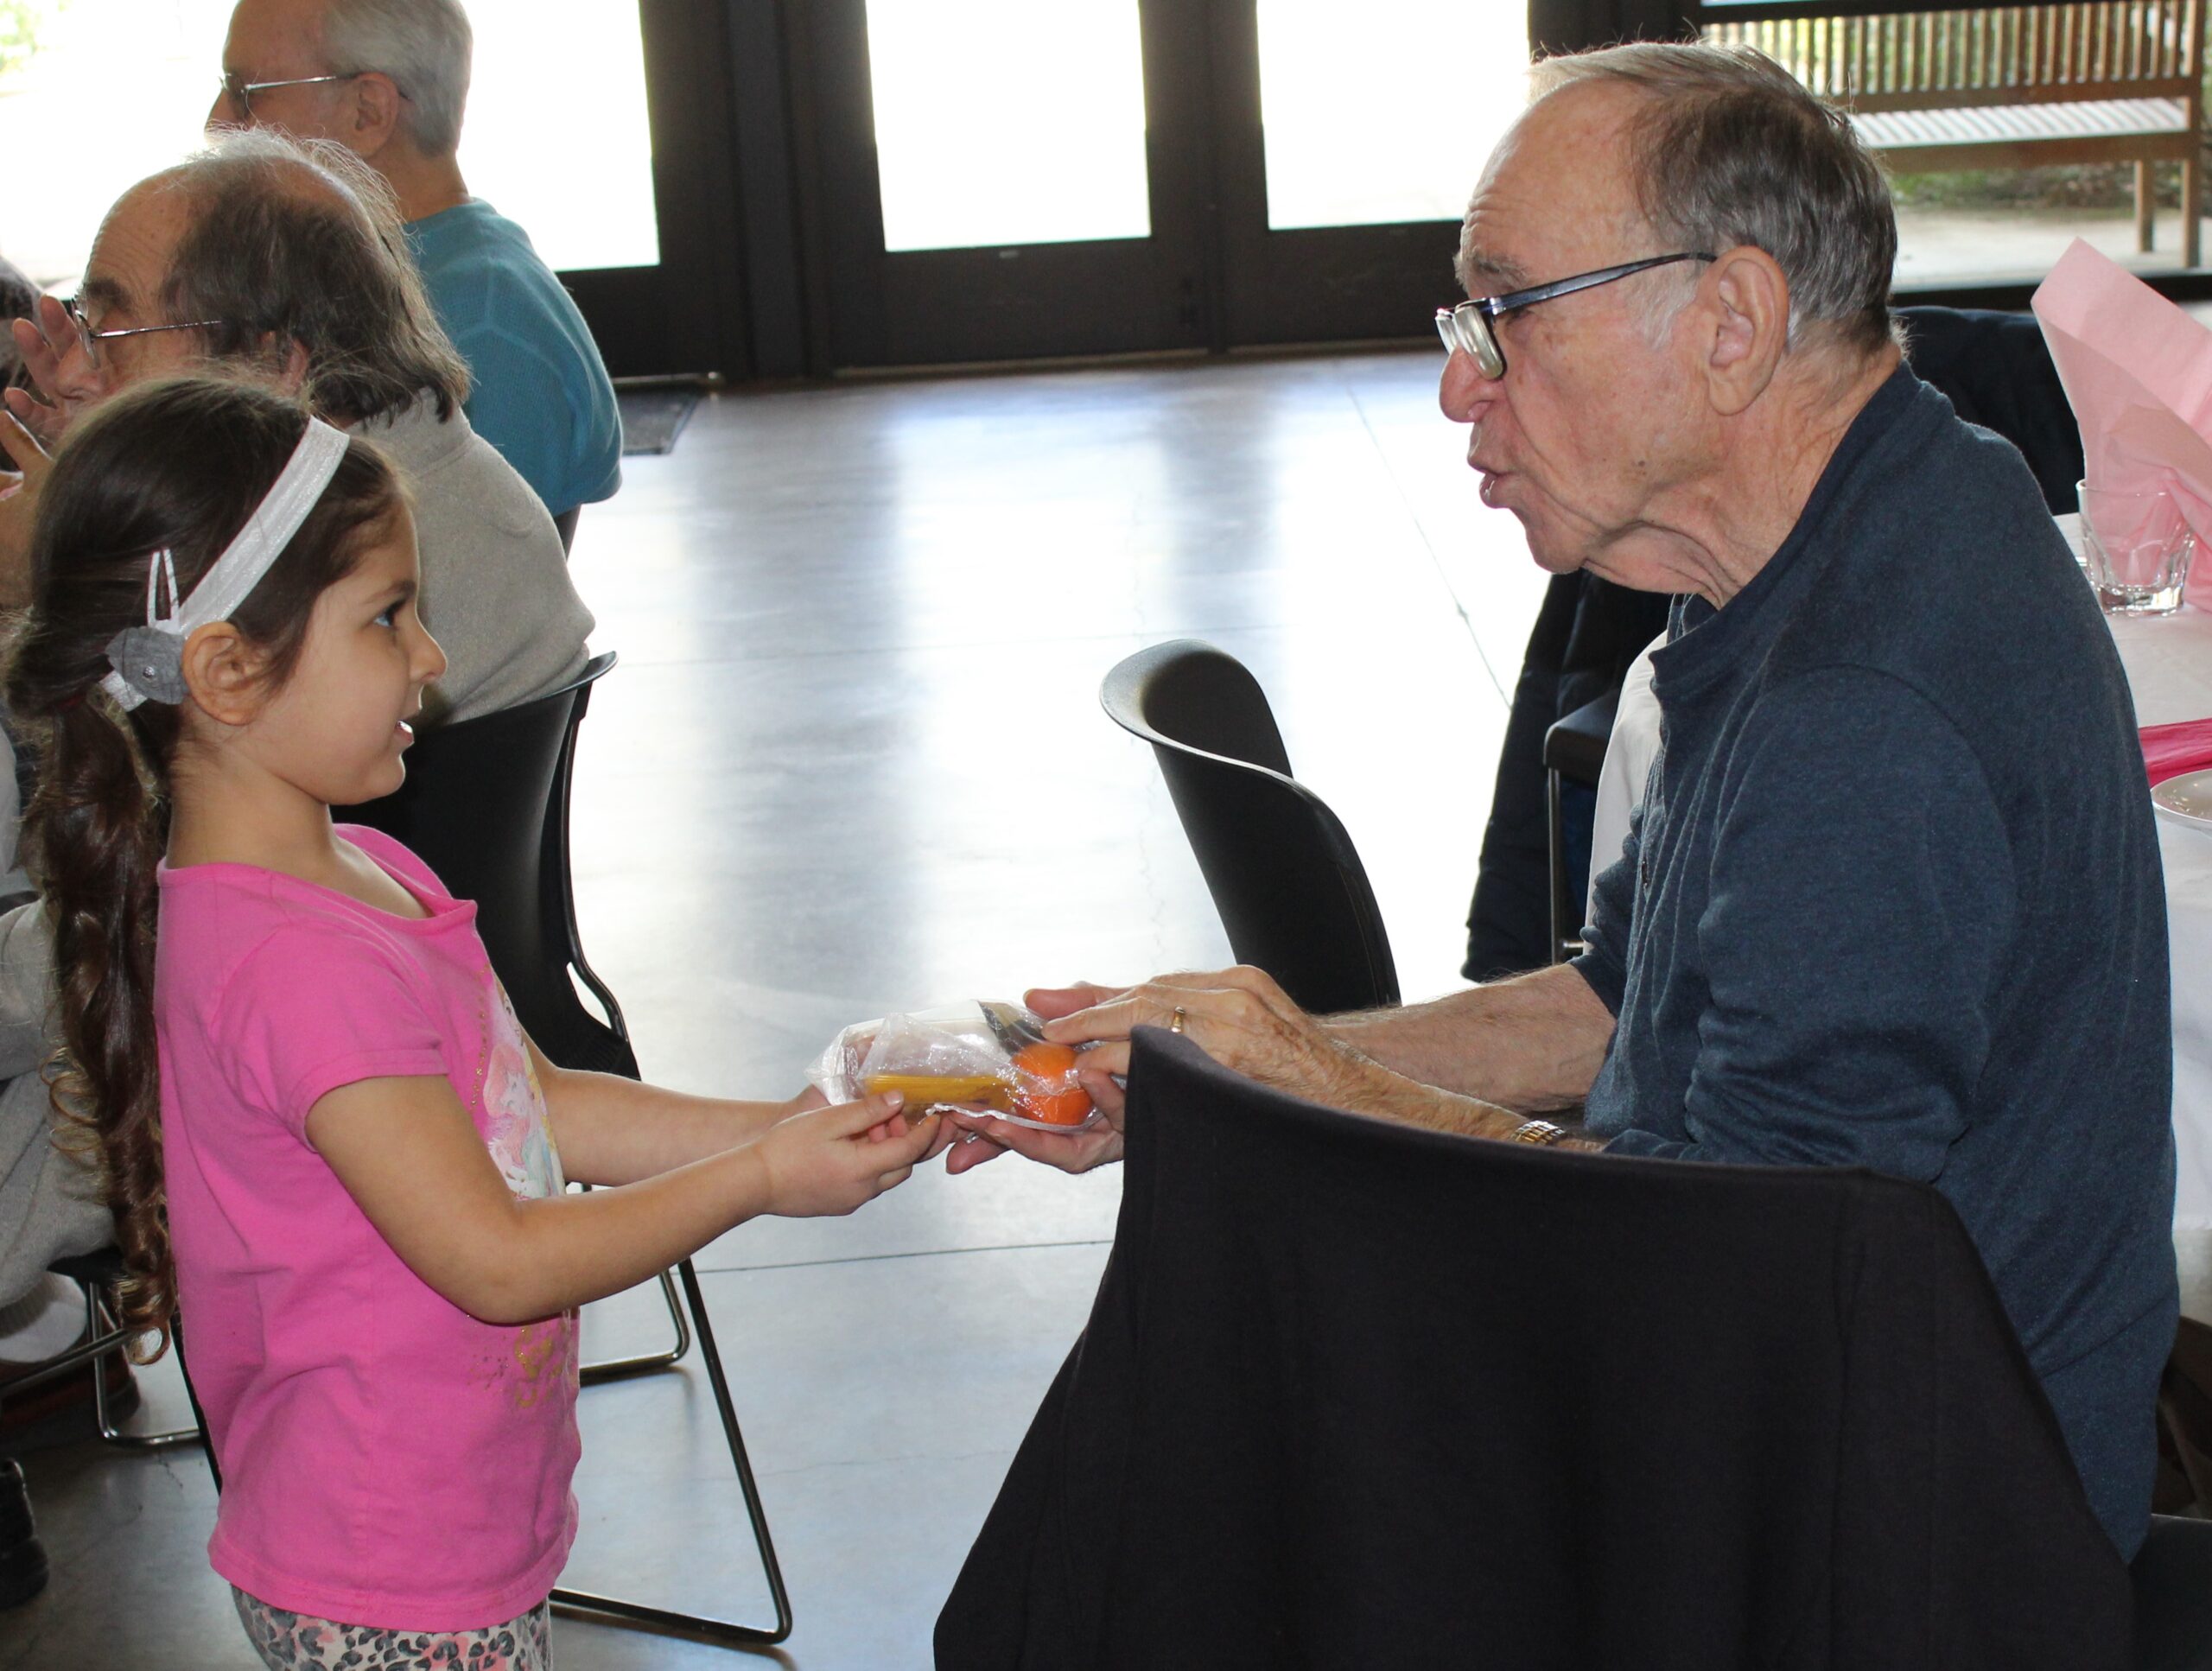 A little girl handing an old man some food.